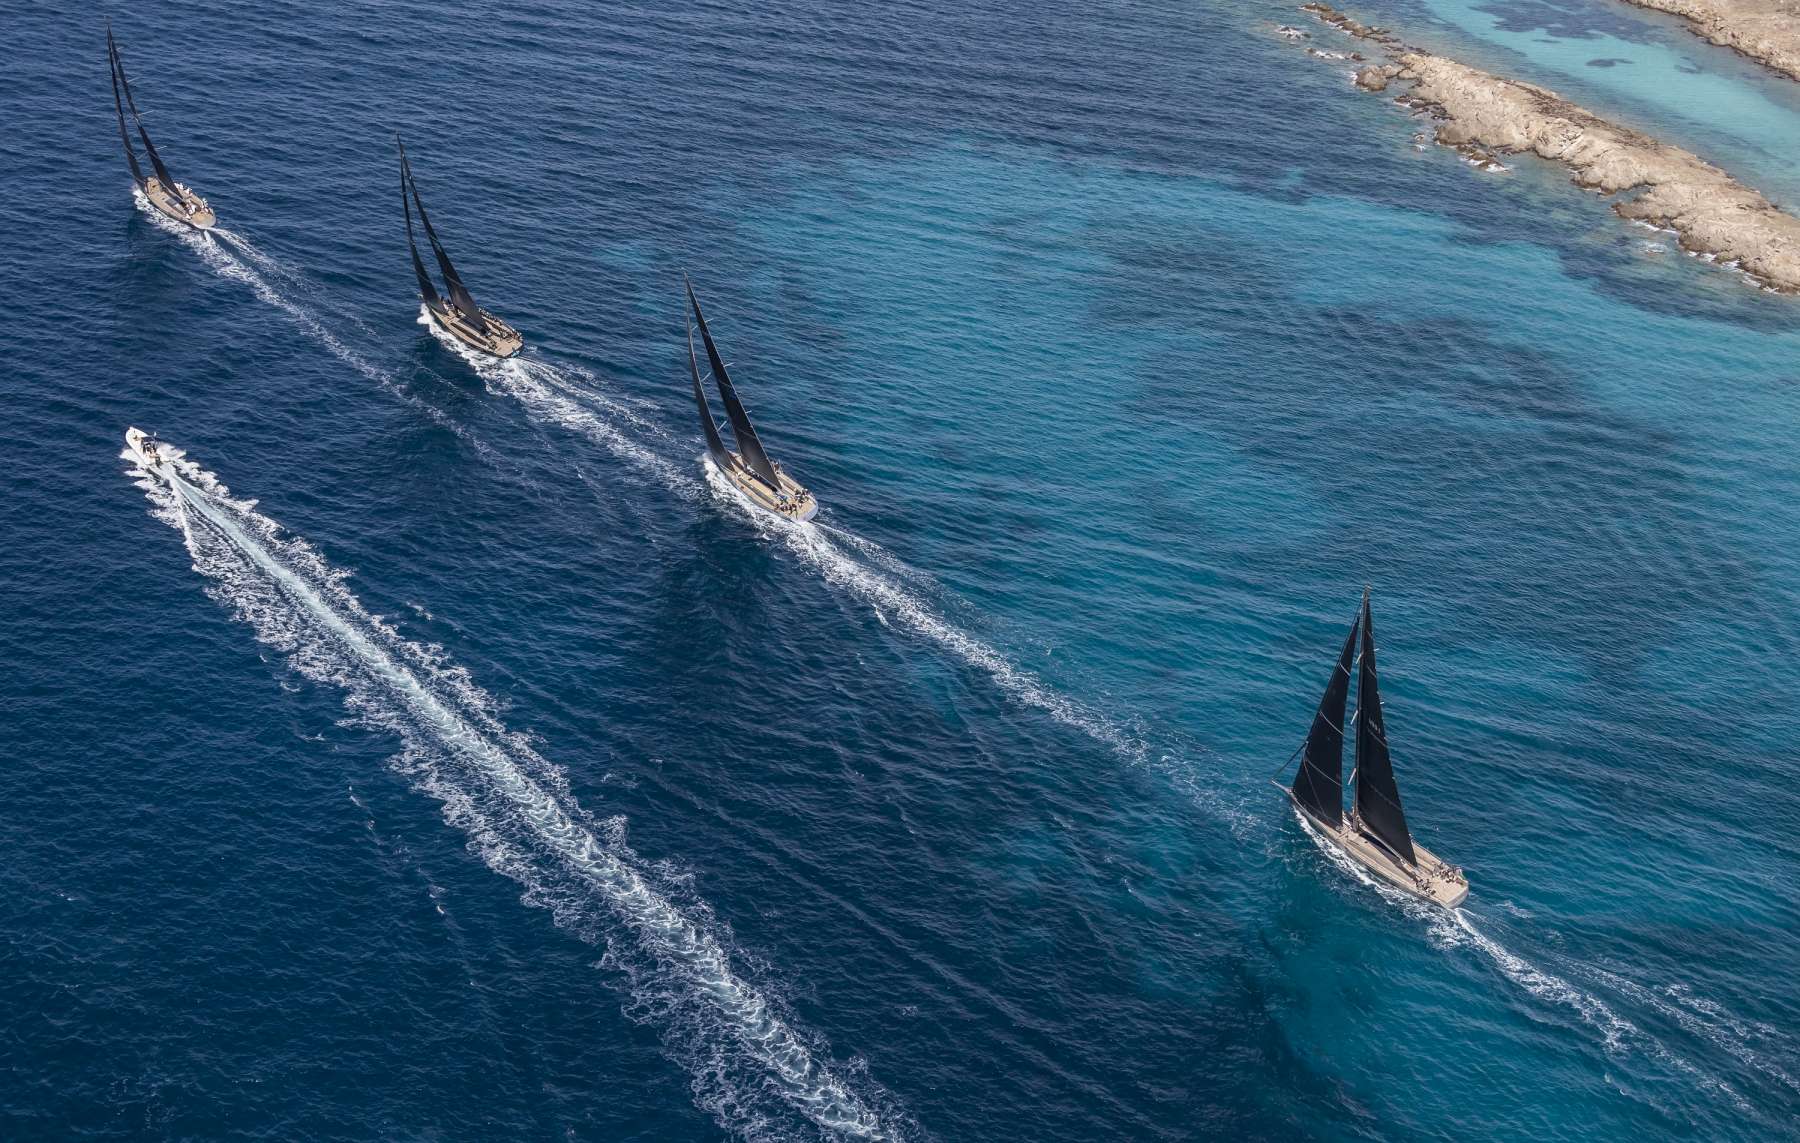 Maxi Yacht Rolex Cup 2017 - Film The Spirit of Yachting online - NEWS - Yacht Club Costa Smeralda